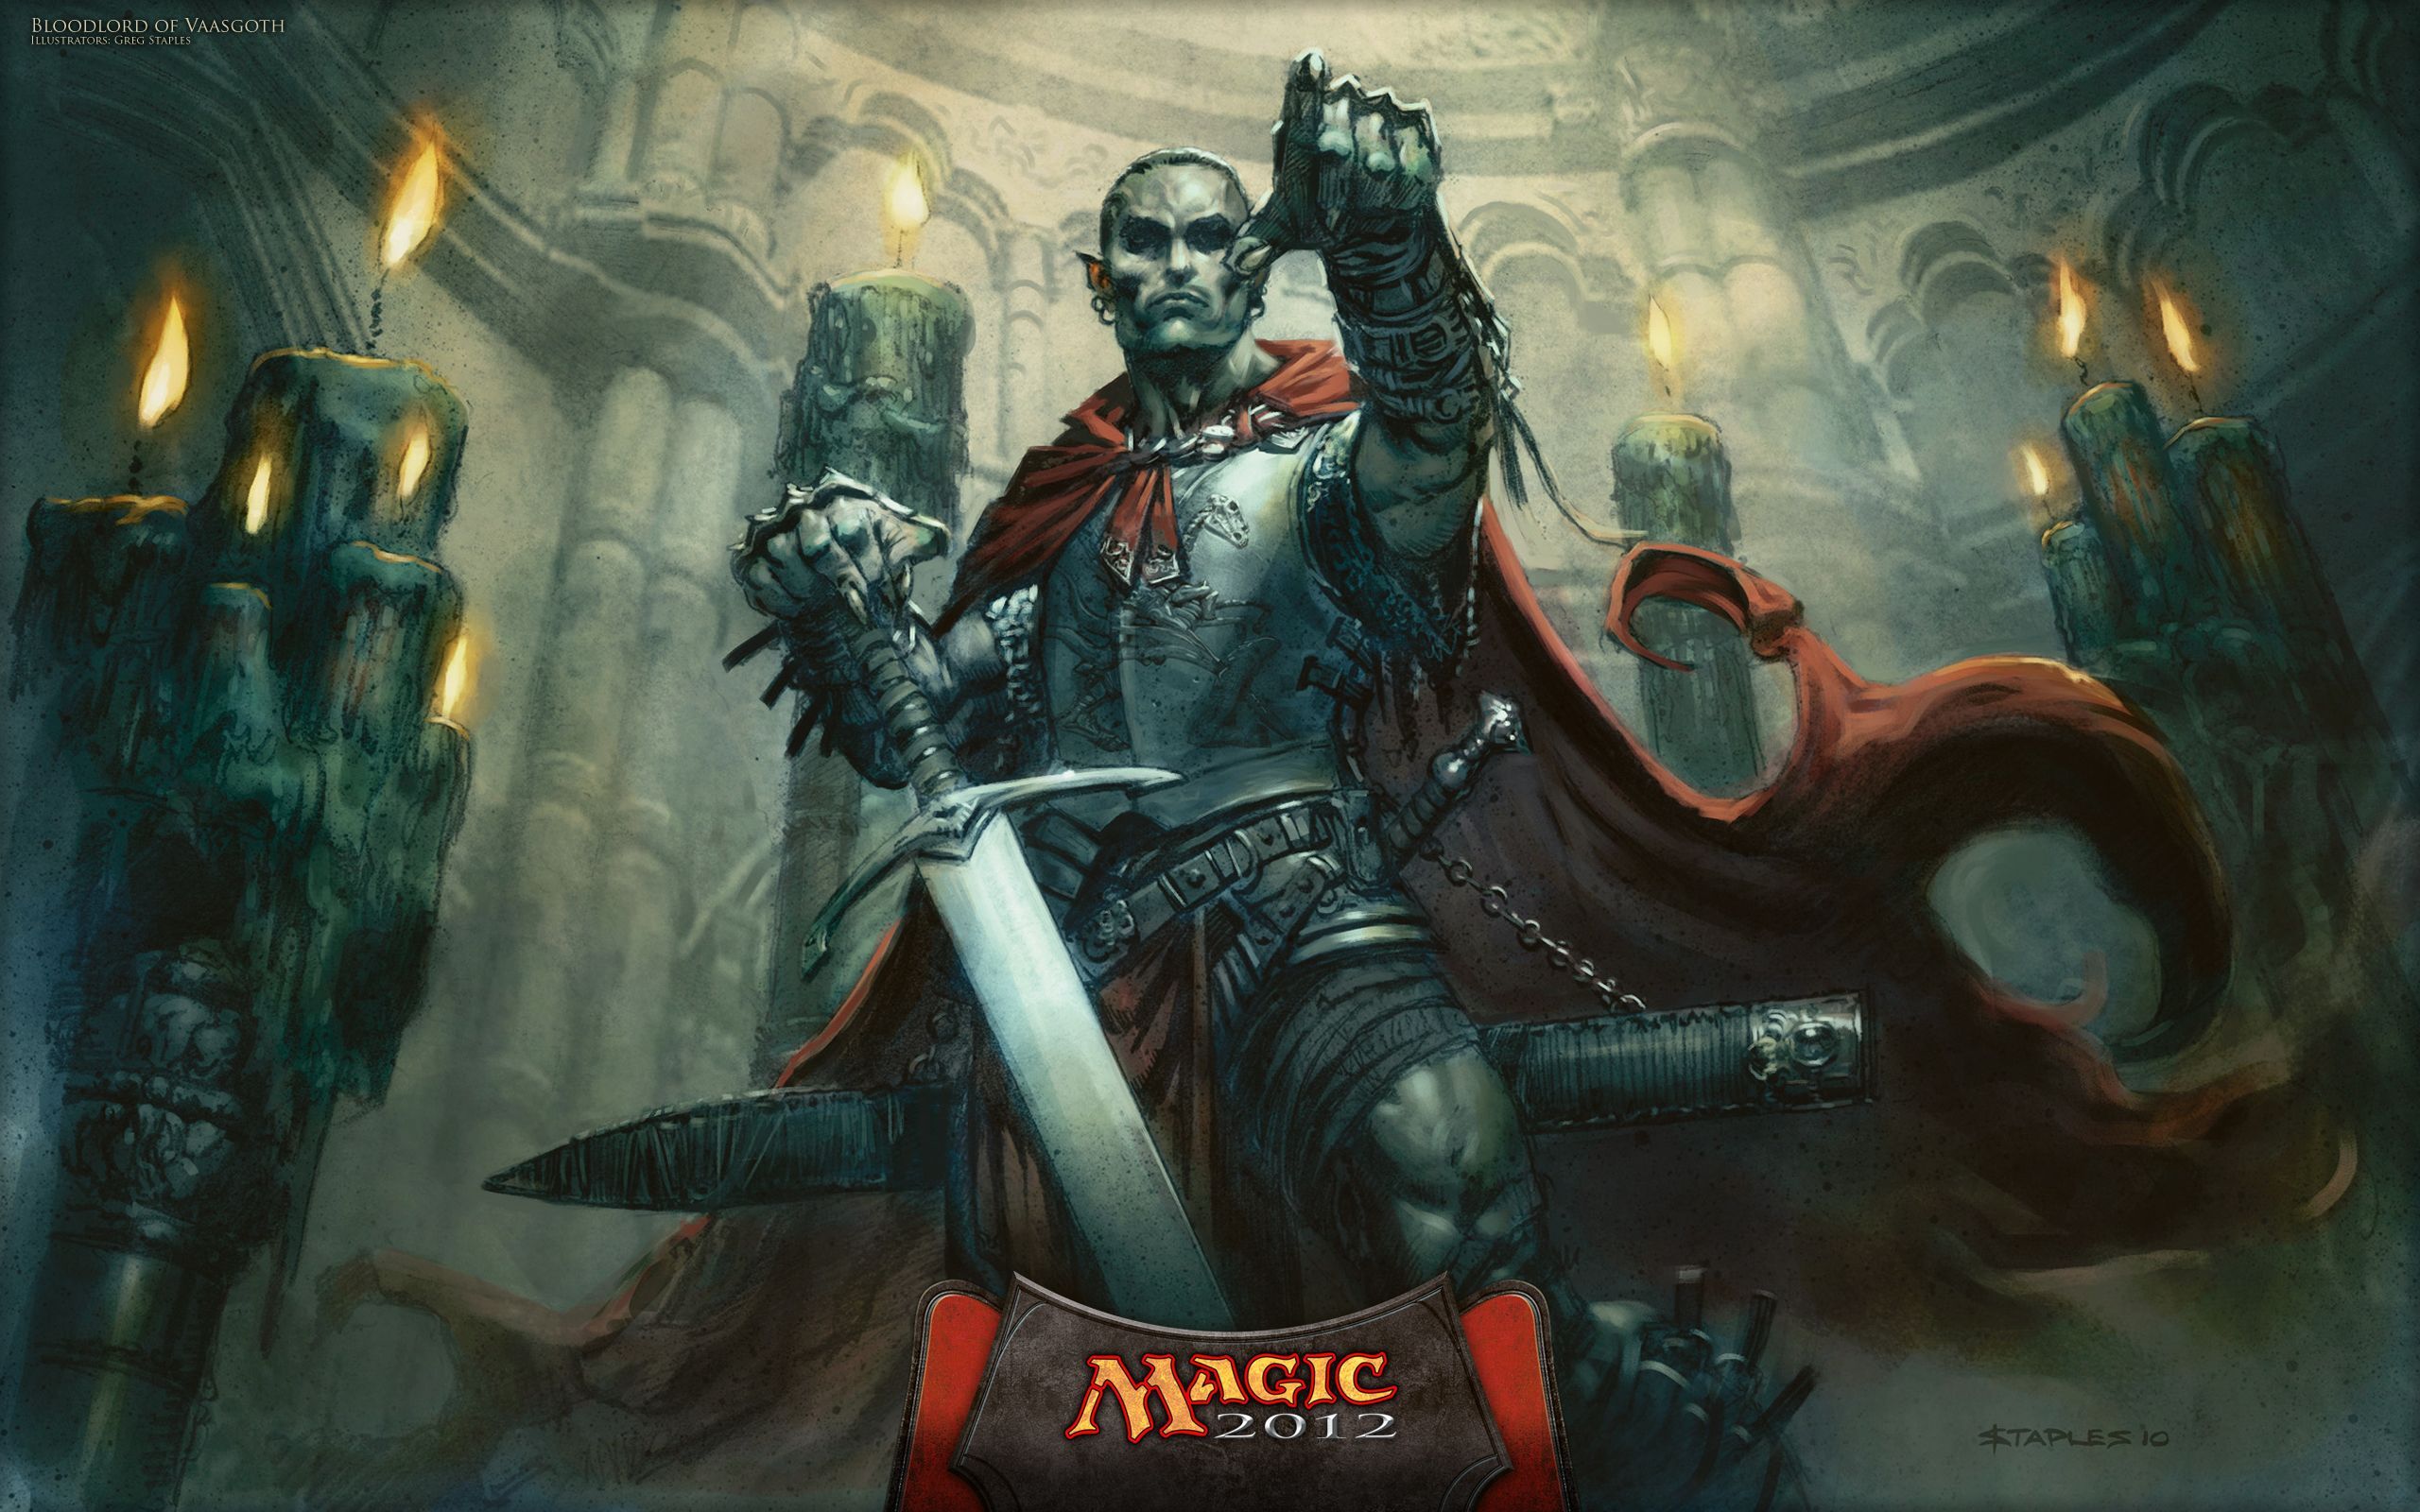 Magic The Gathering Vampire Wallpaper Blood Lord Wallpaper - Bloodlord Of Vaasgoth - HD Wallpaper 